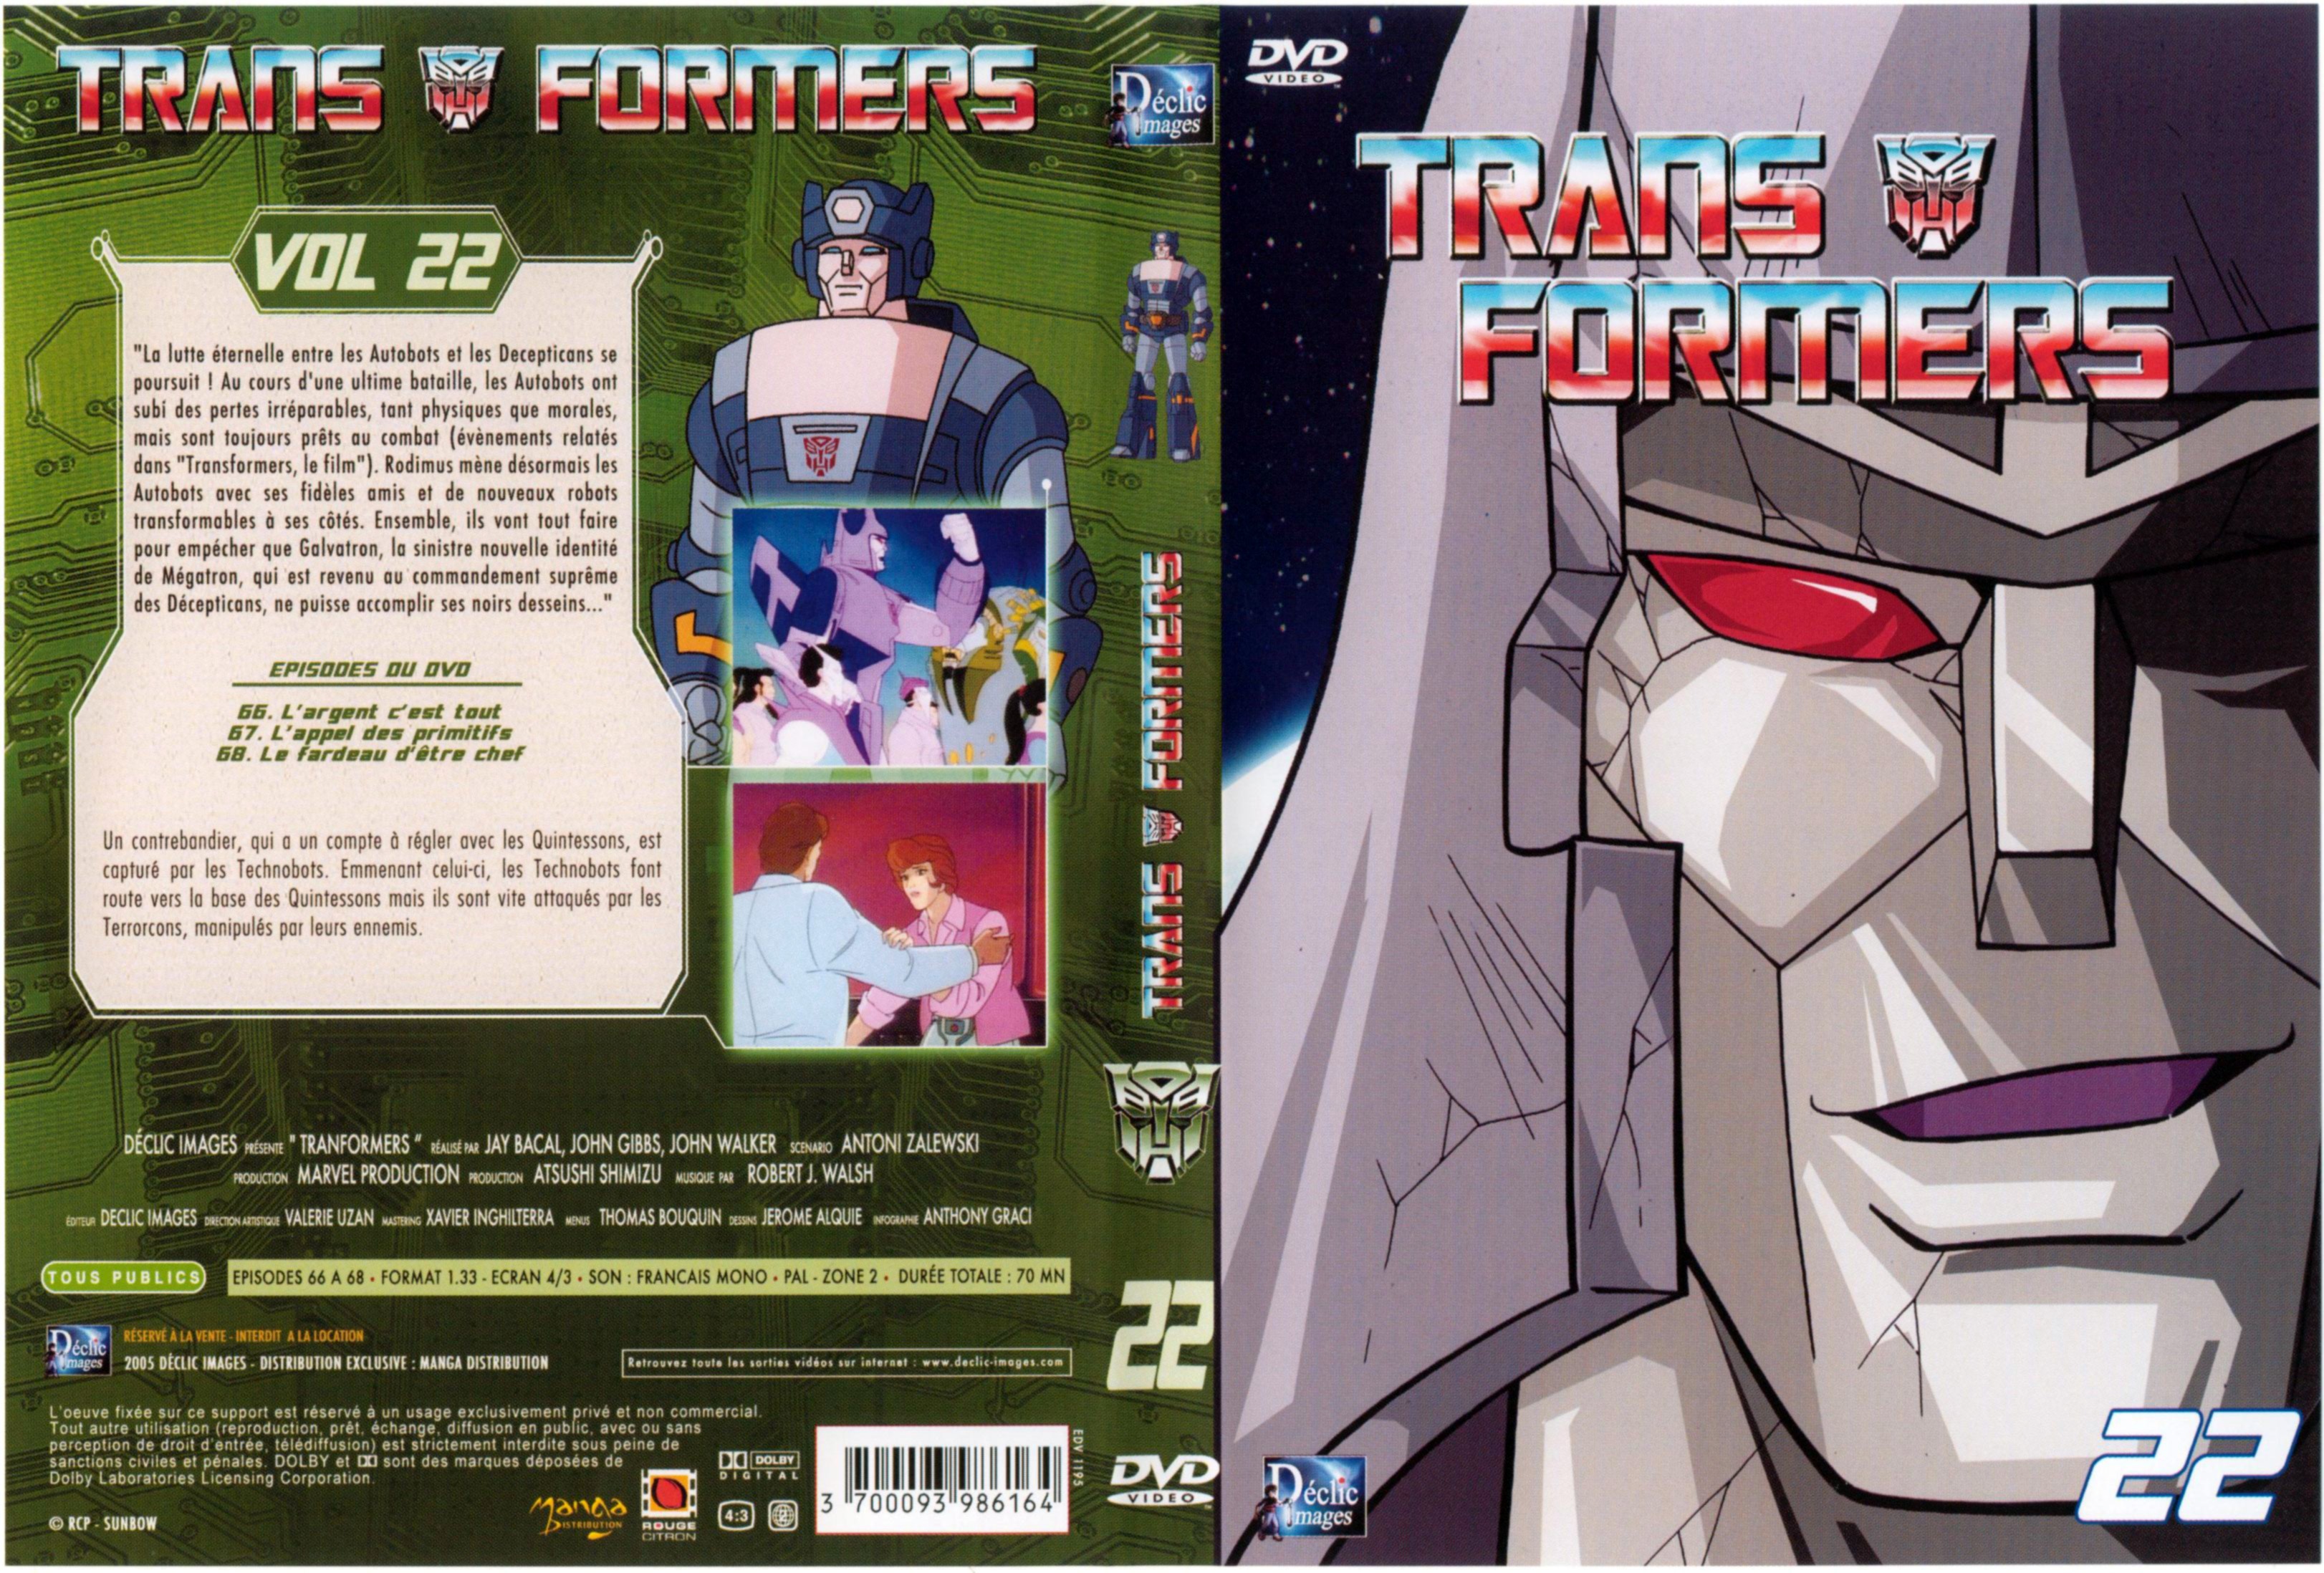 Jaquette DVD Transformers vol 22